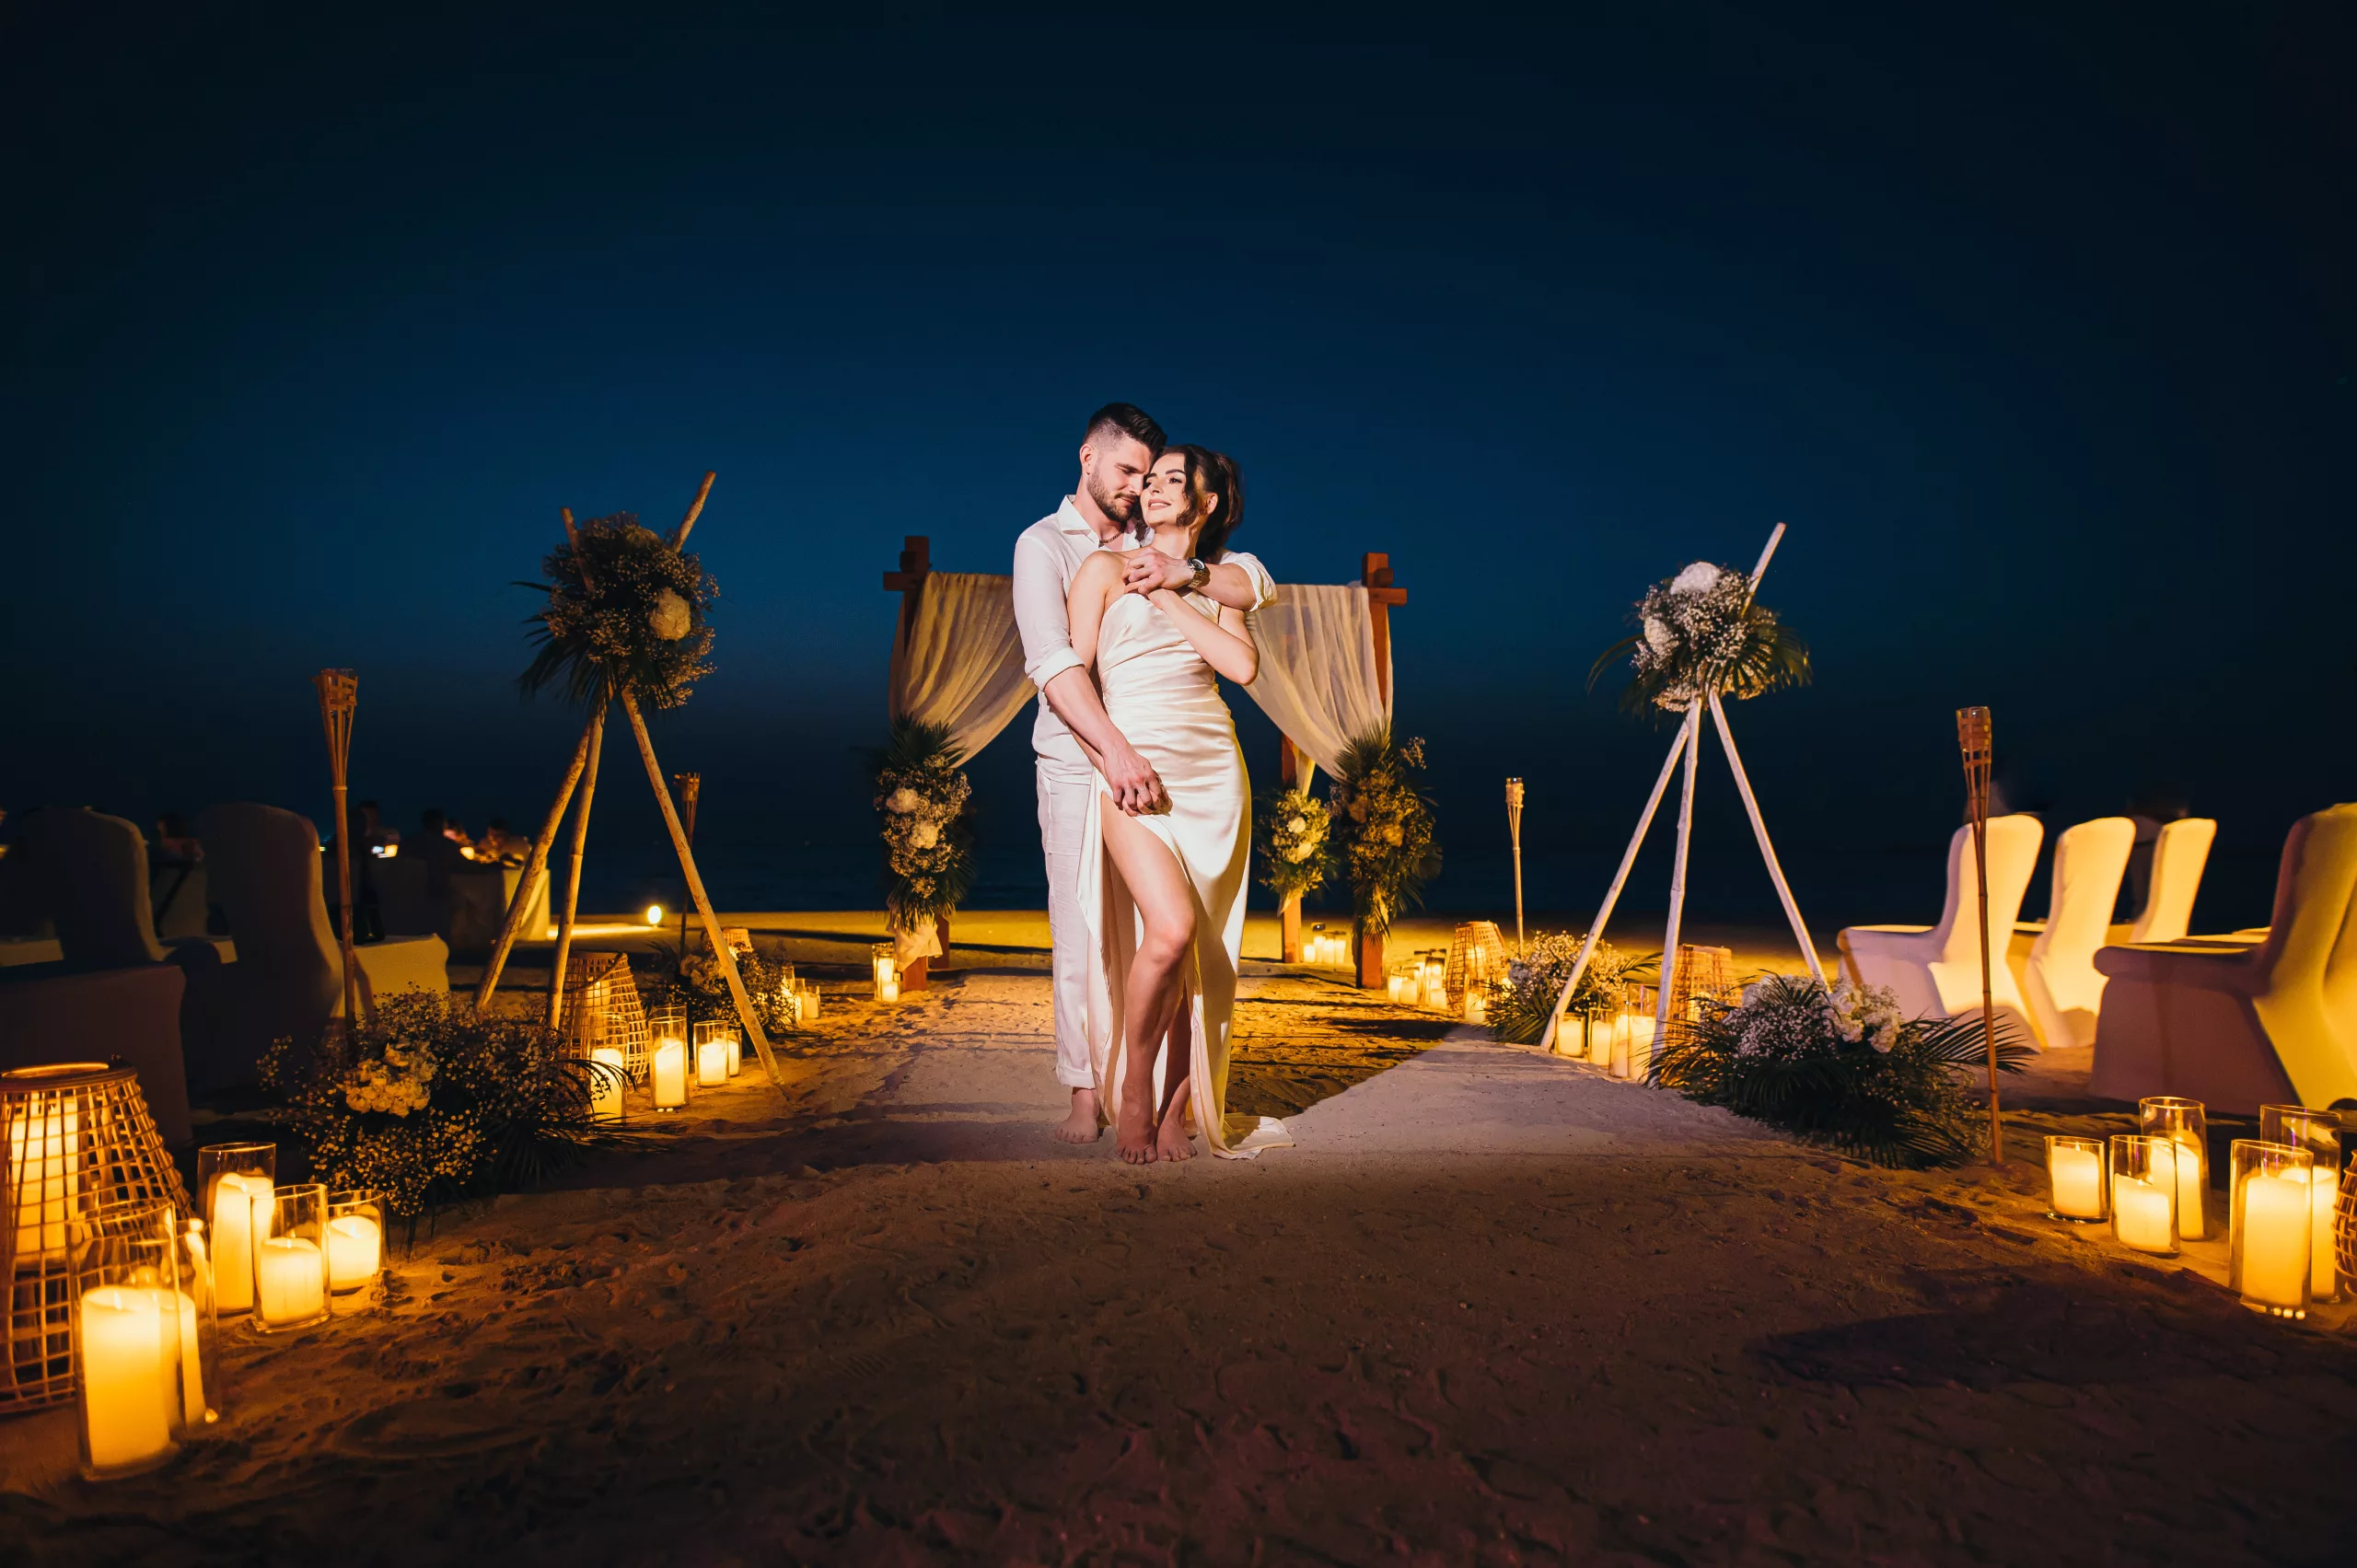 Adina & Sebastian - Wedding Photography - Dubai Photographer - Dubai Photography - Beach Wedding - www.imagin8.ae